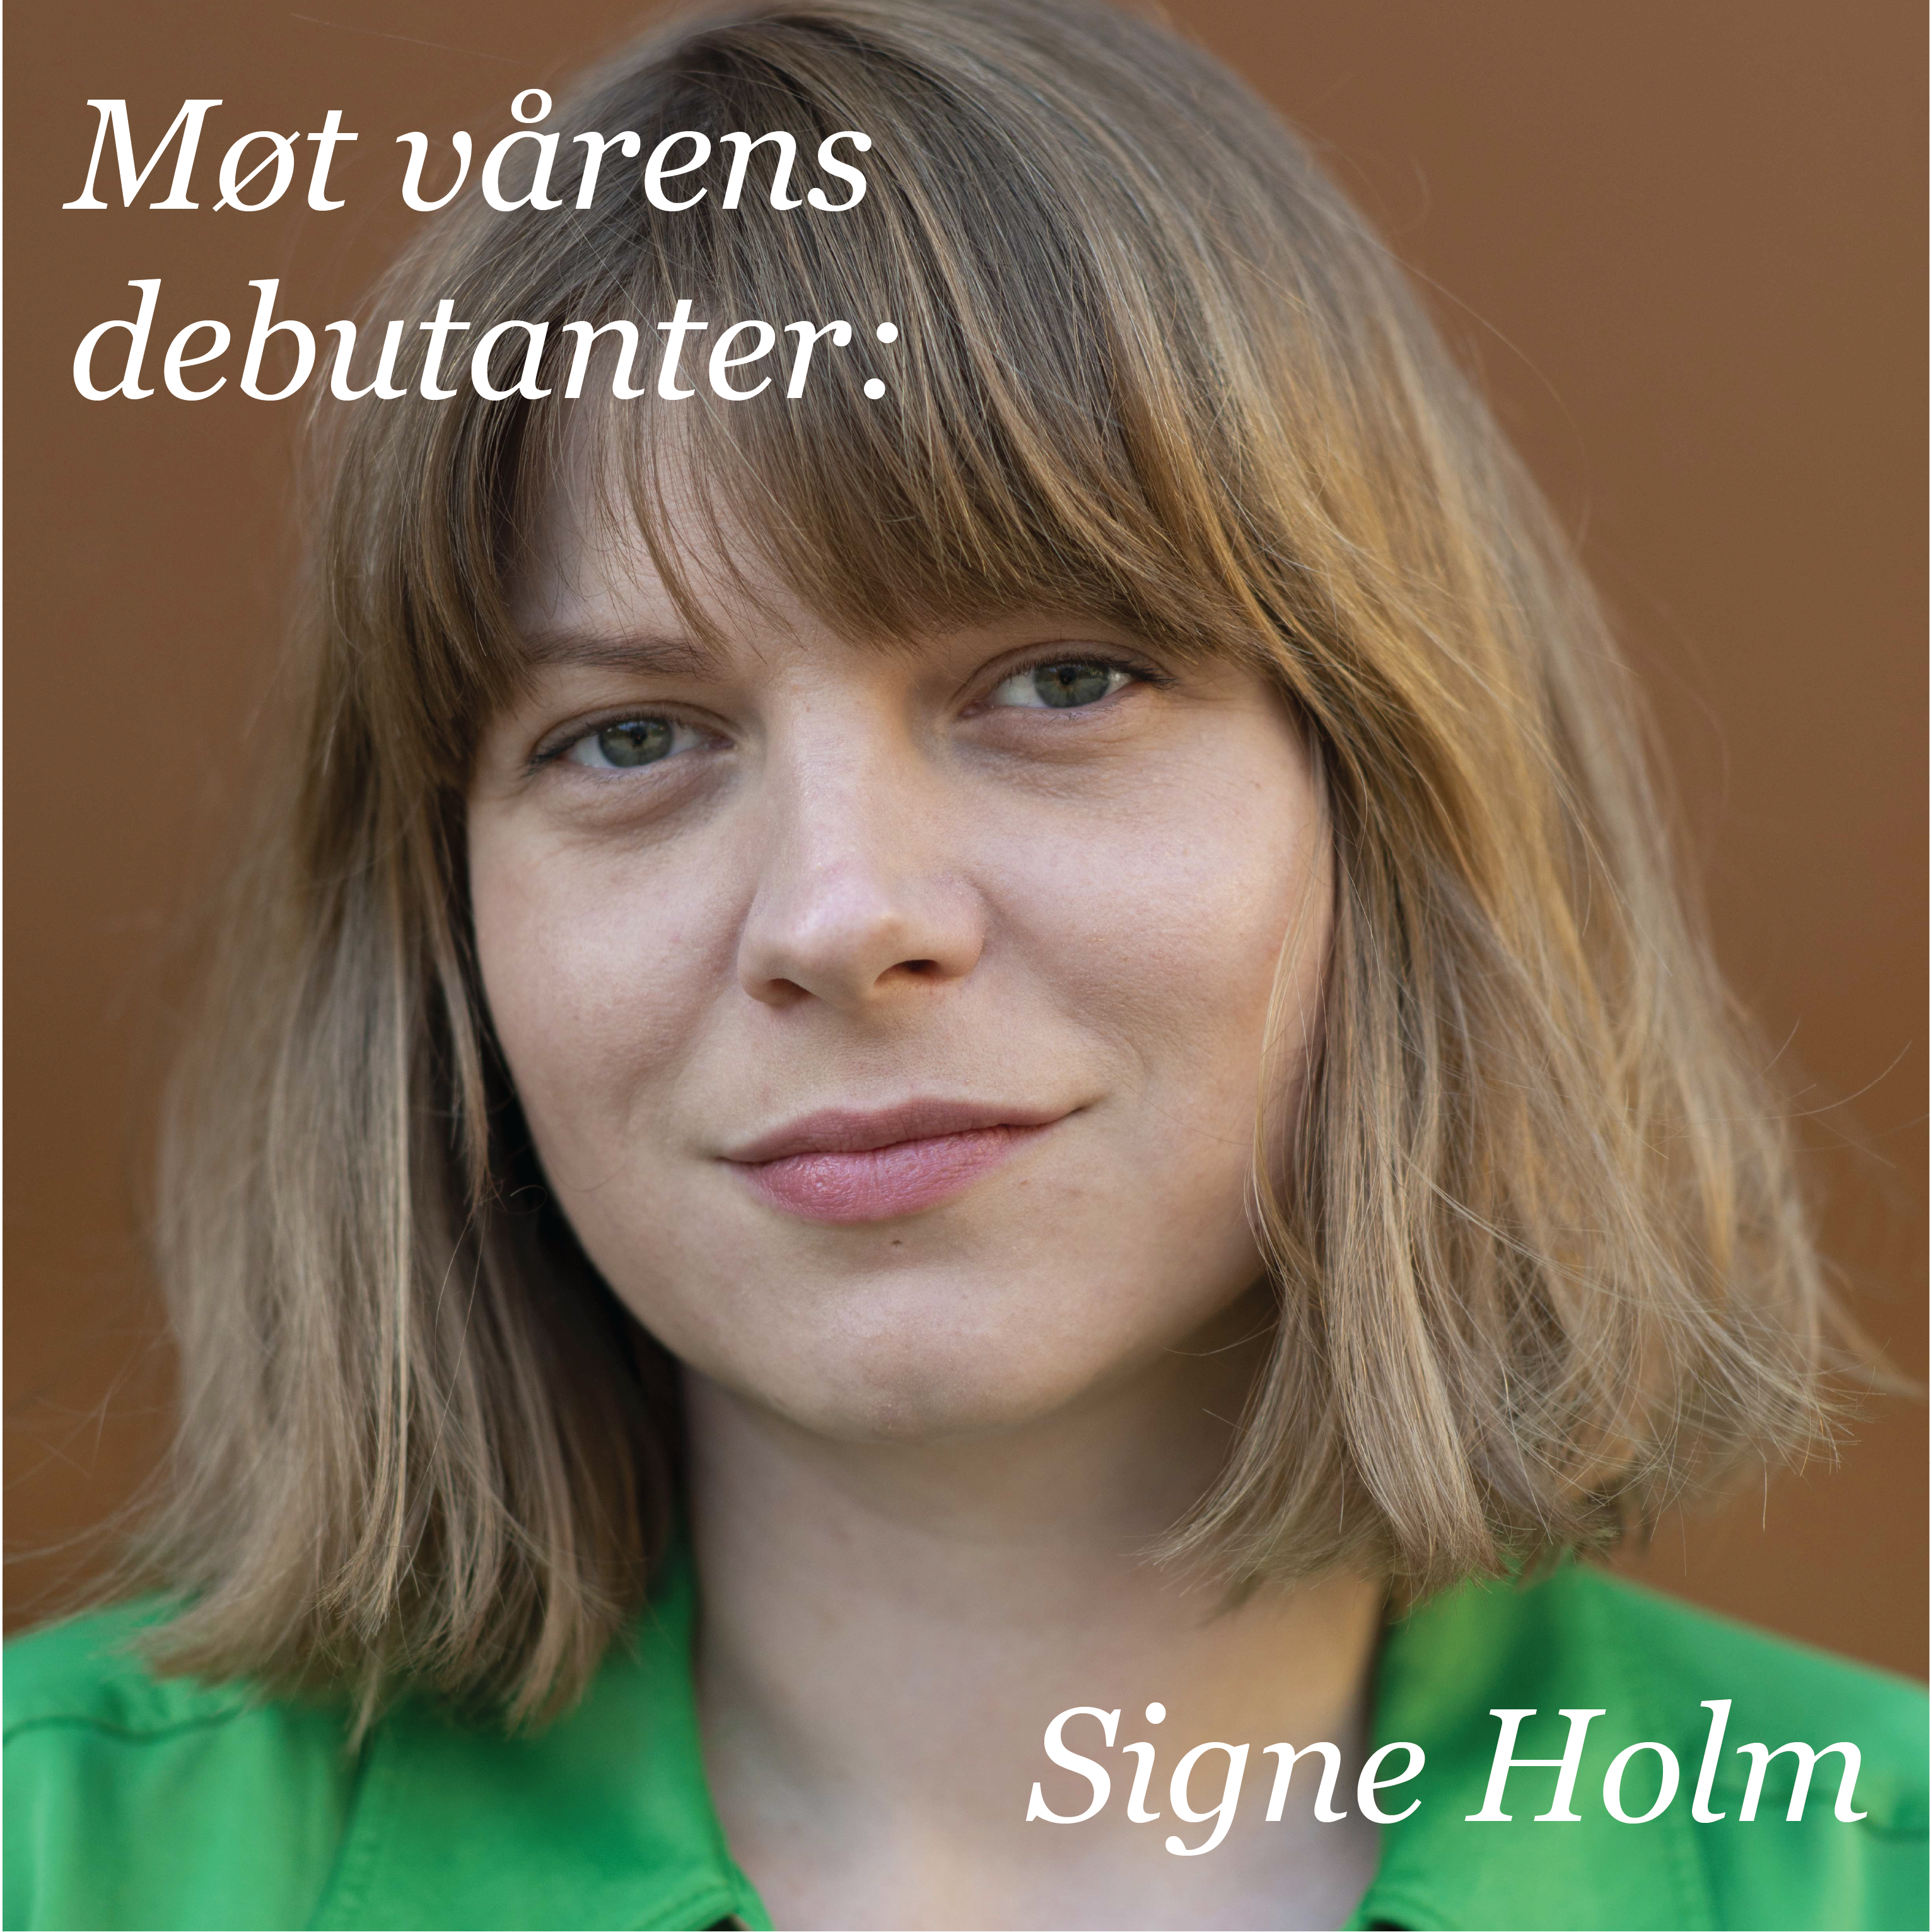 Les intervjuet med Signe Holm